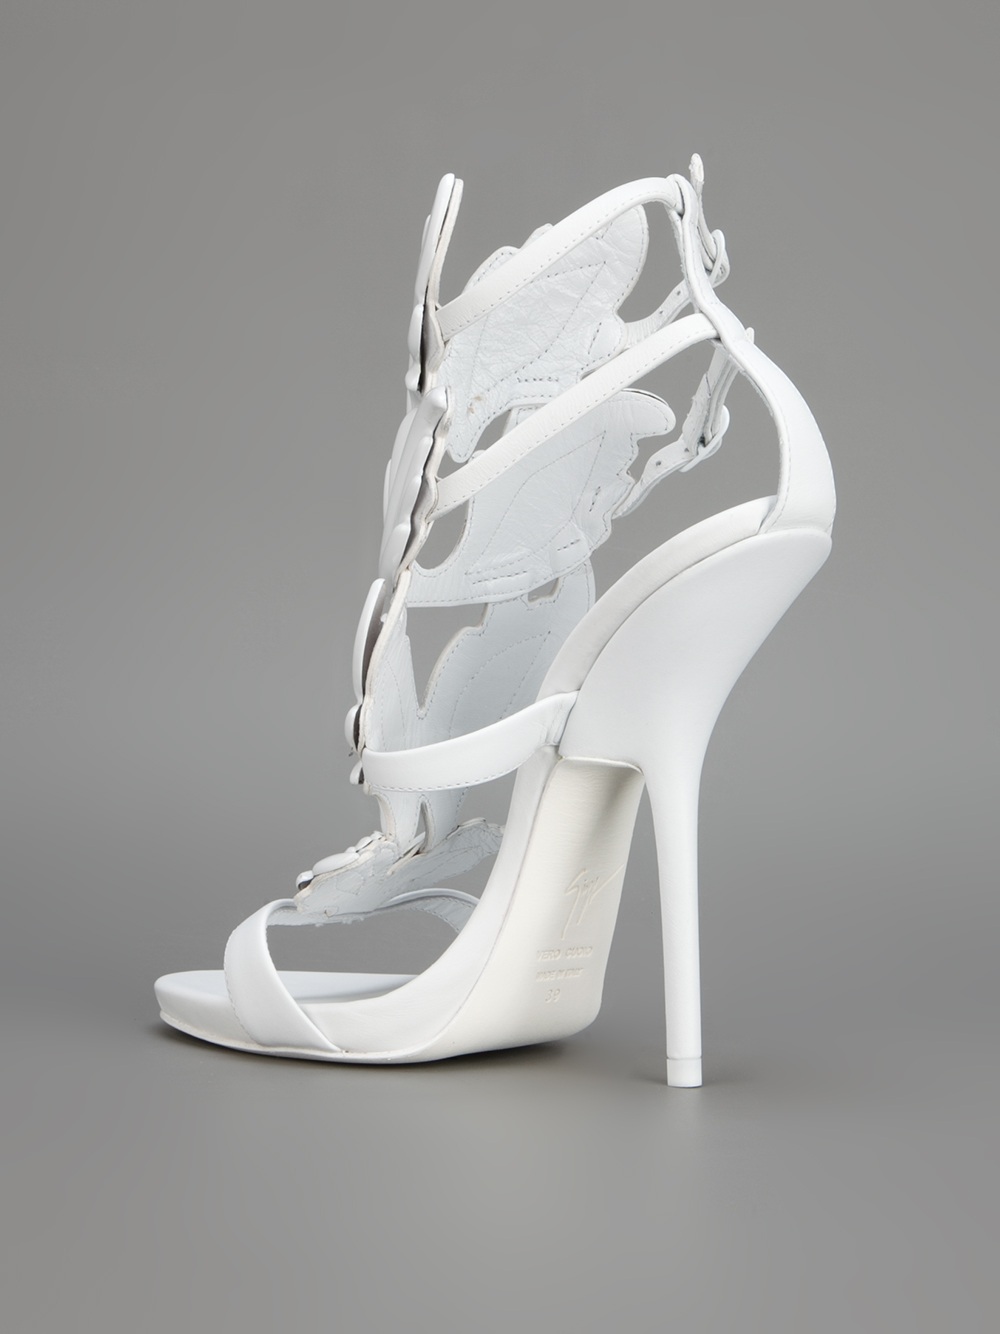 Giuseppe Zanotti 'Cruel Summer' Sandals in White | Lyst